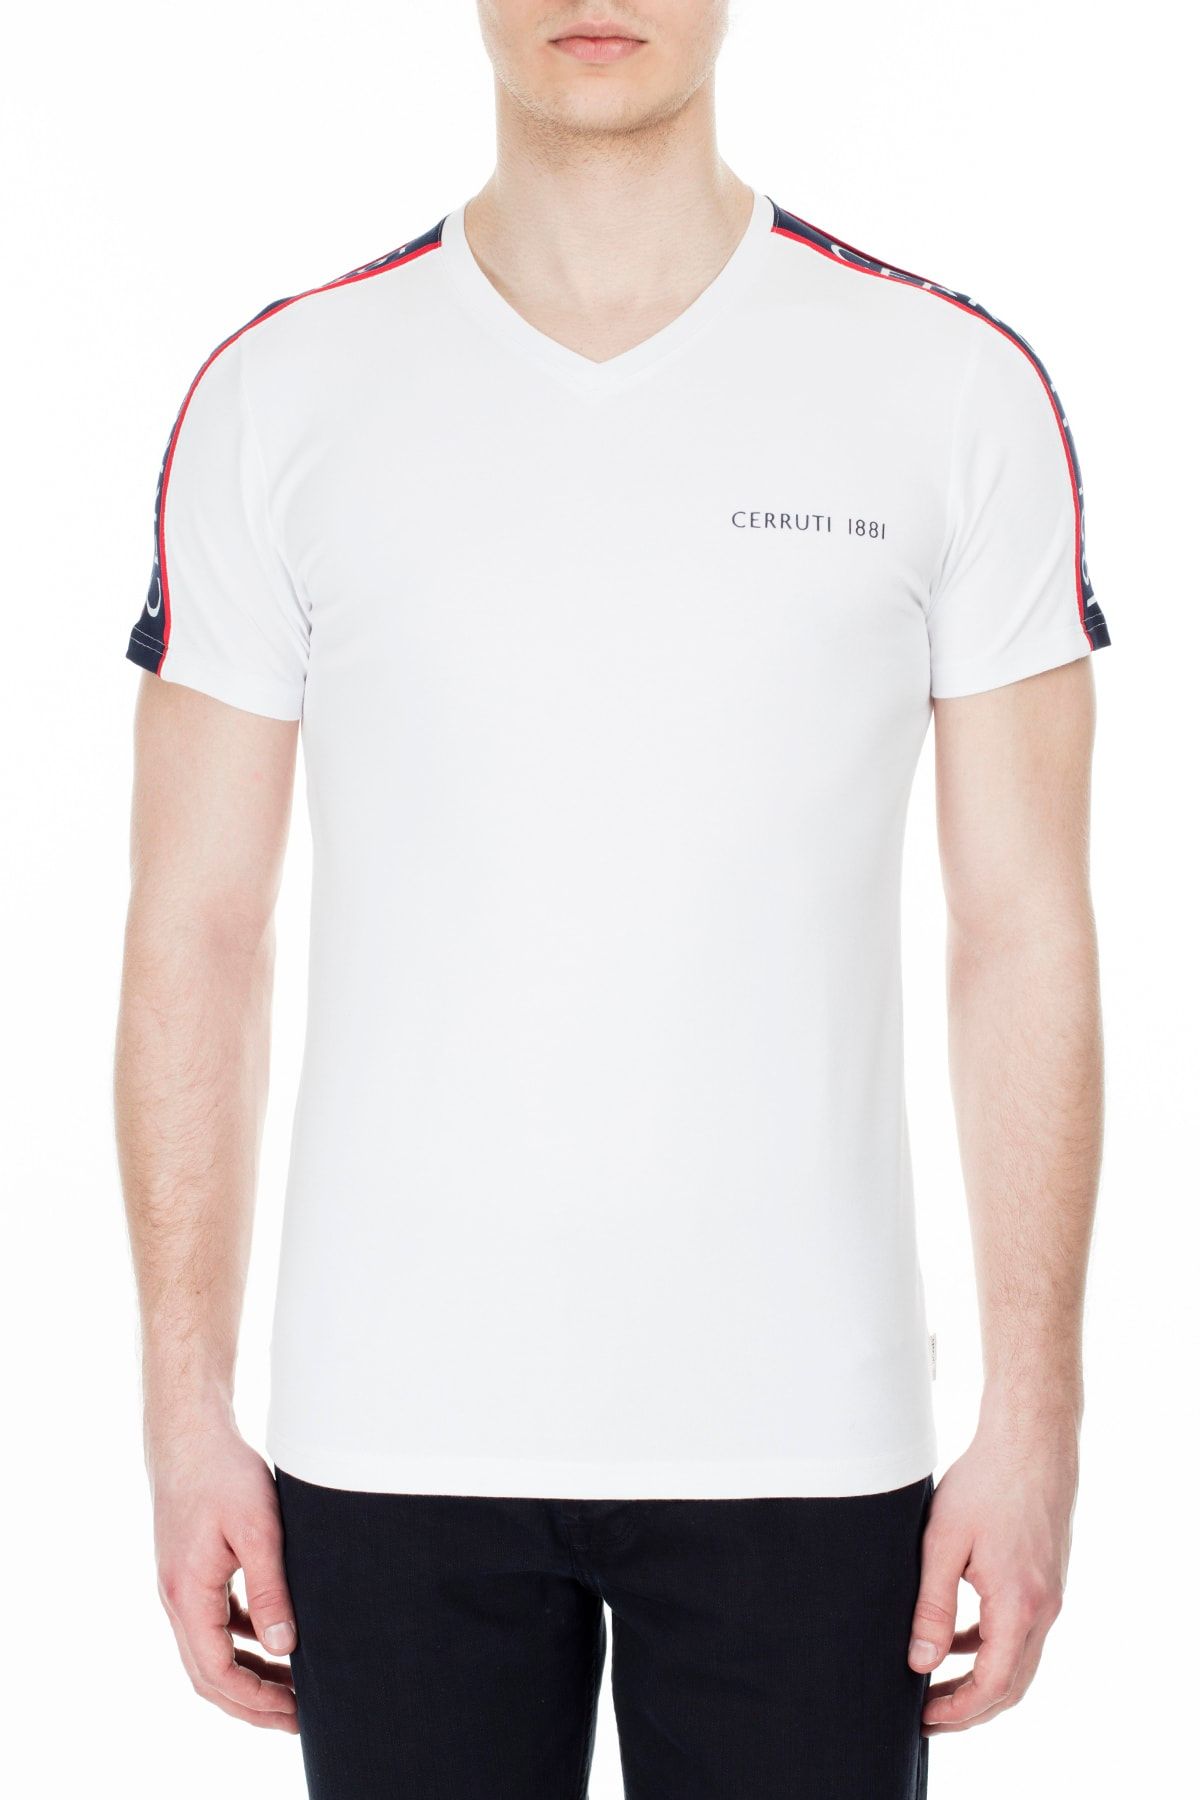 Cerruti 1881 T Shirt Erkek T Shirt 203